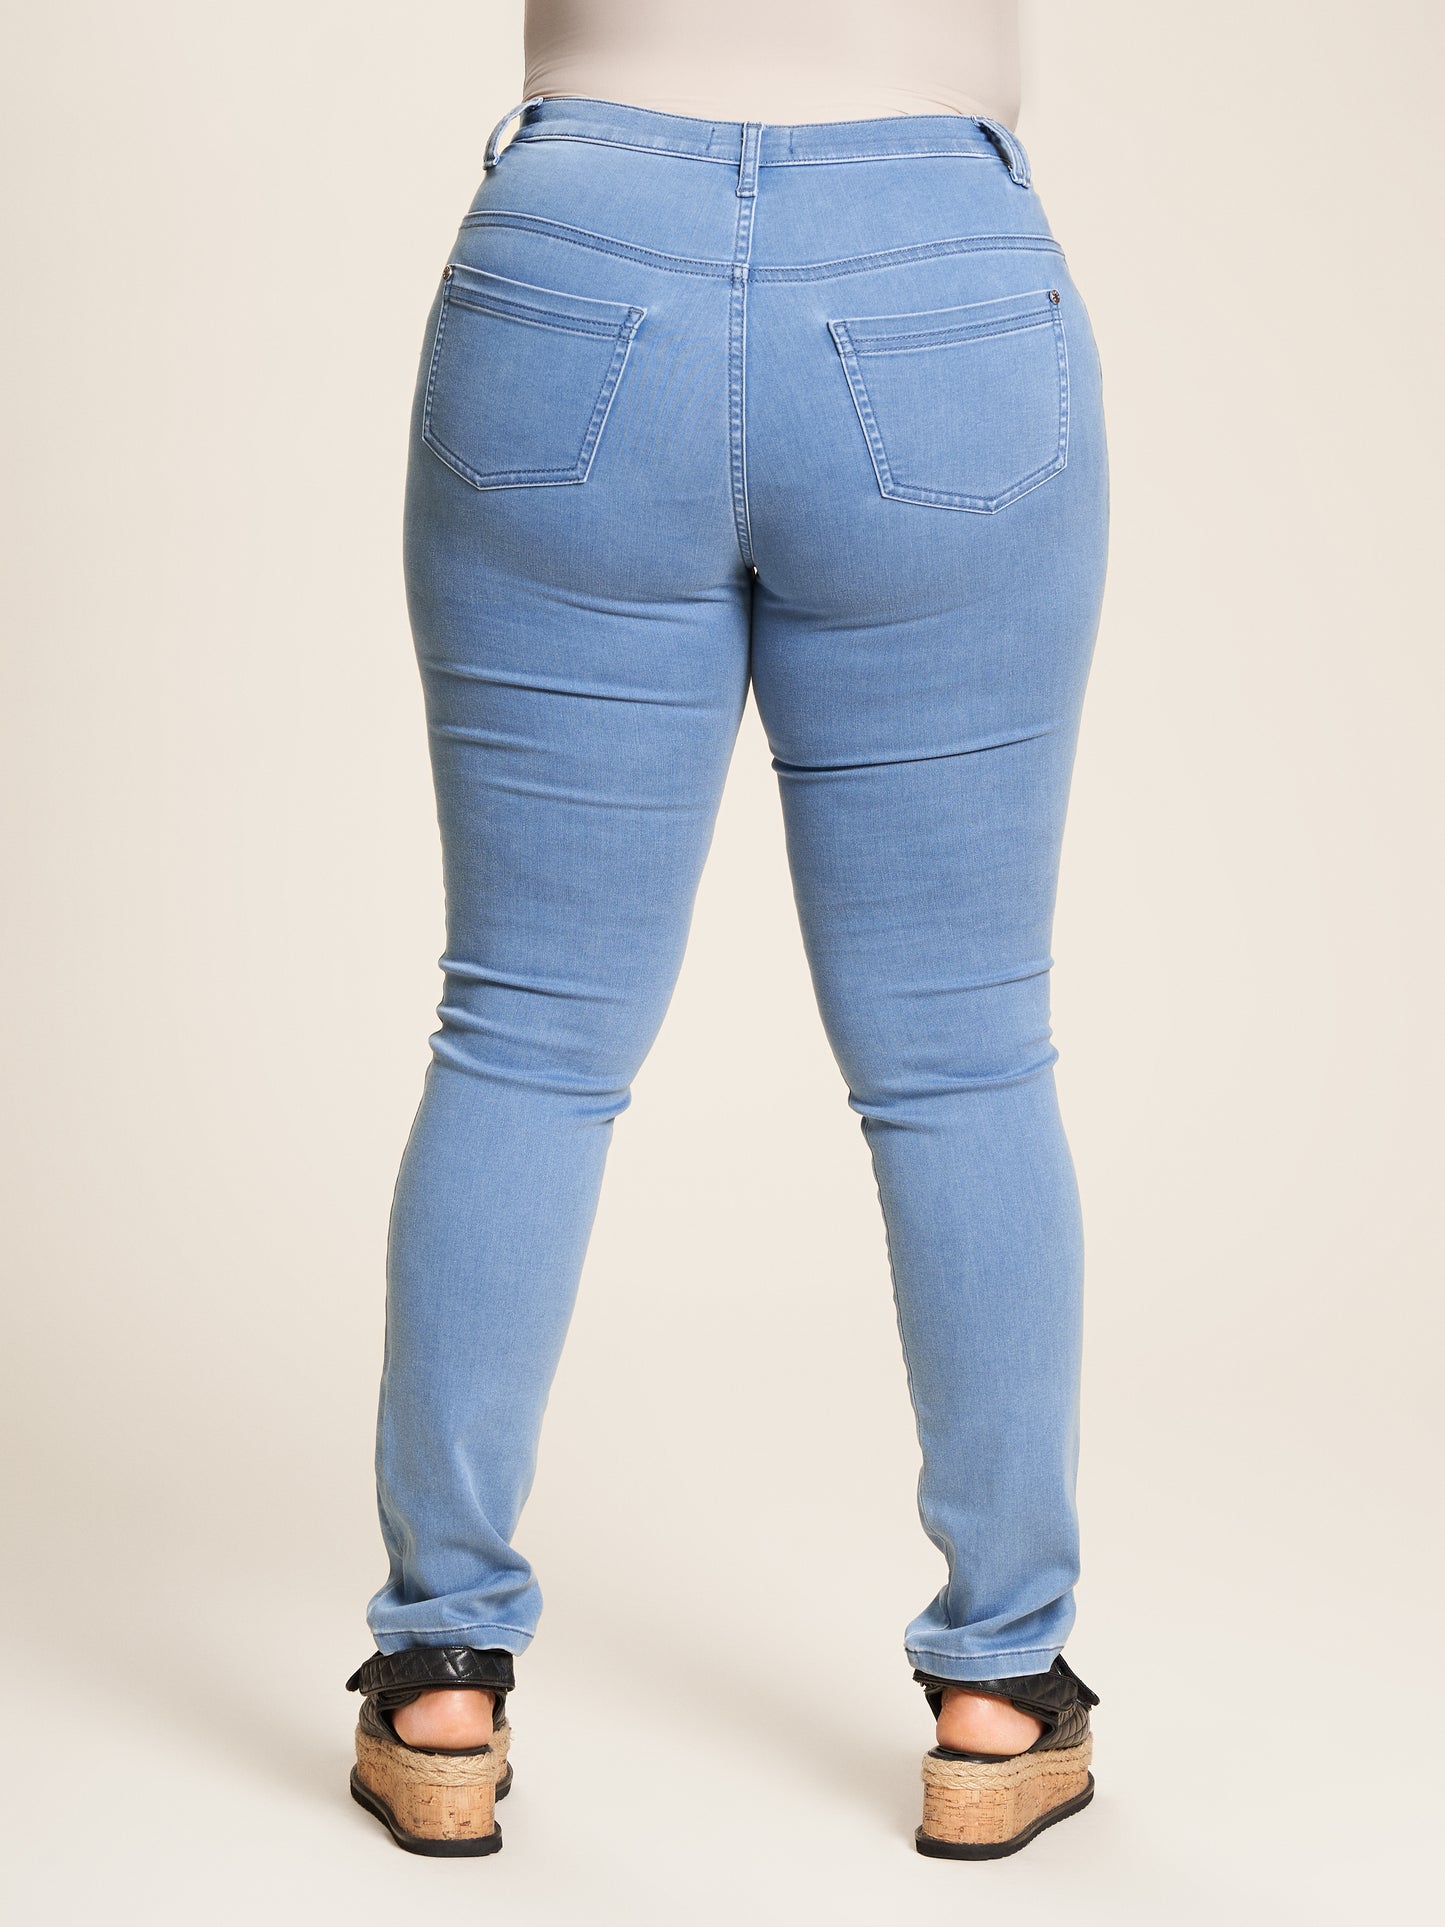 Studio Strækbar jeans fra STUDIO CLOTHING Pants Light Denim Ashley Length 32"